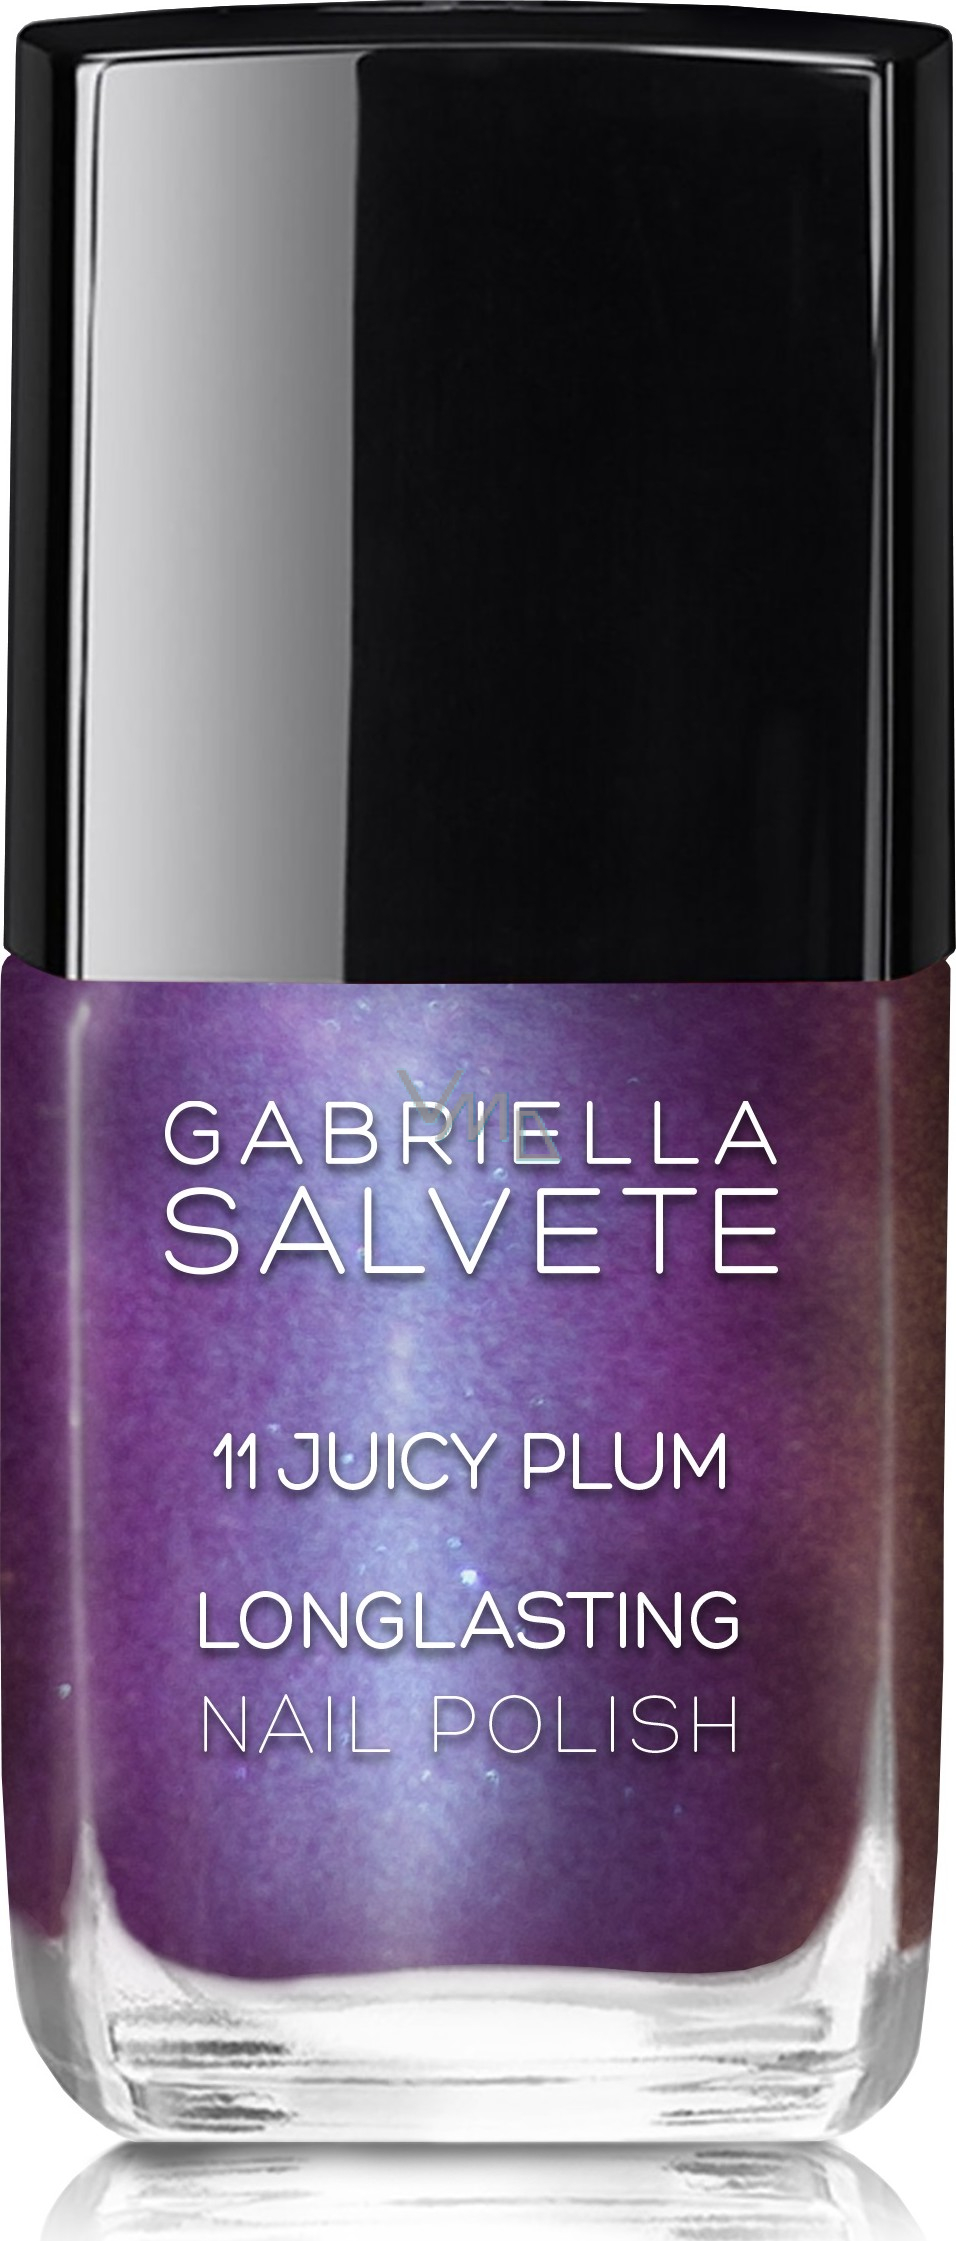 Gabriella Salvete Longlasting Enamel Long Lasting High Gloss Nail Polish 11 Juicy Plum 11 Ml Vmd Parfumerie Drogerie